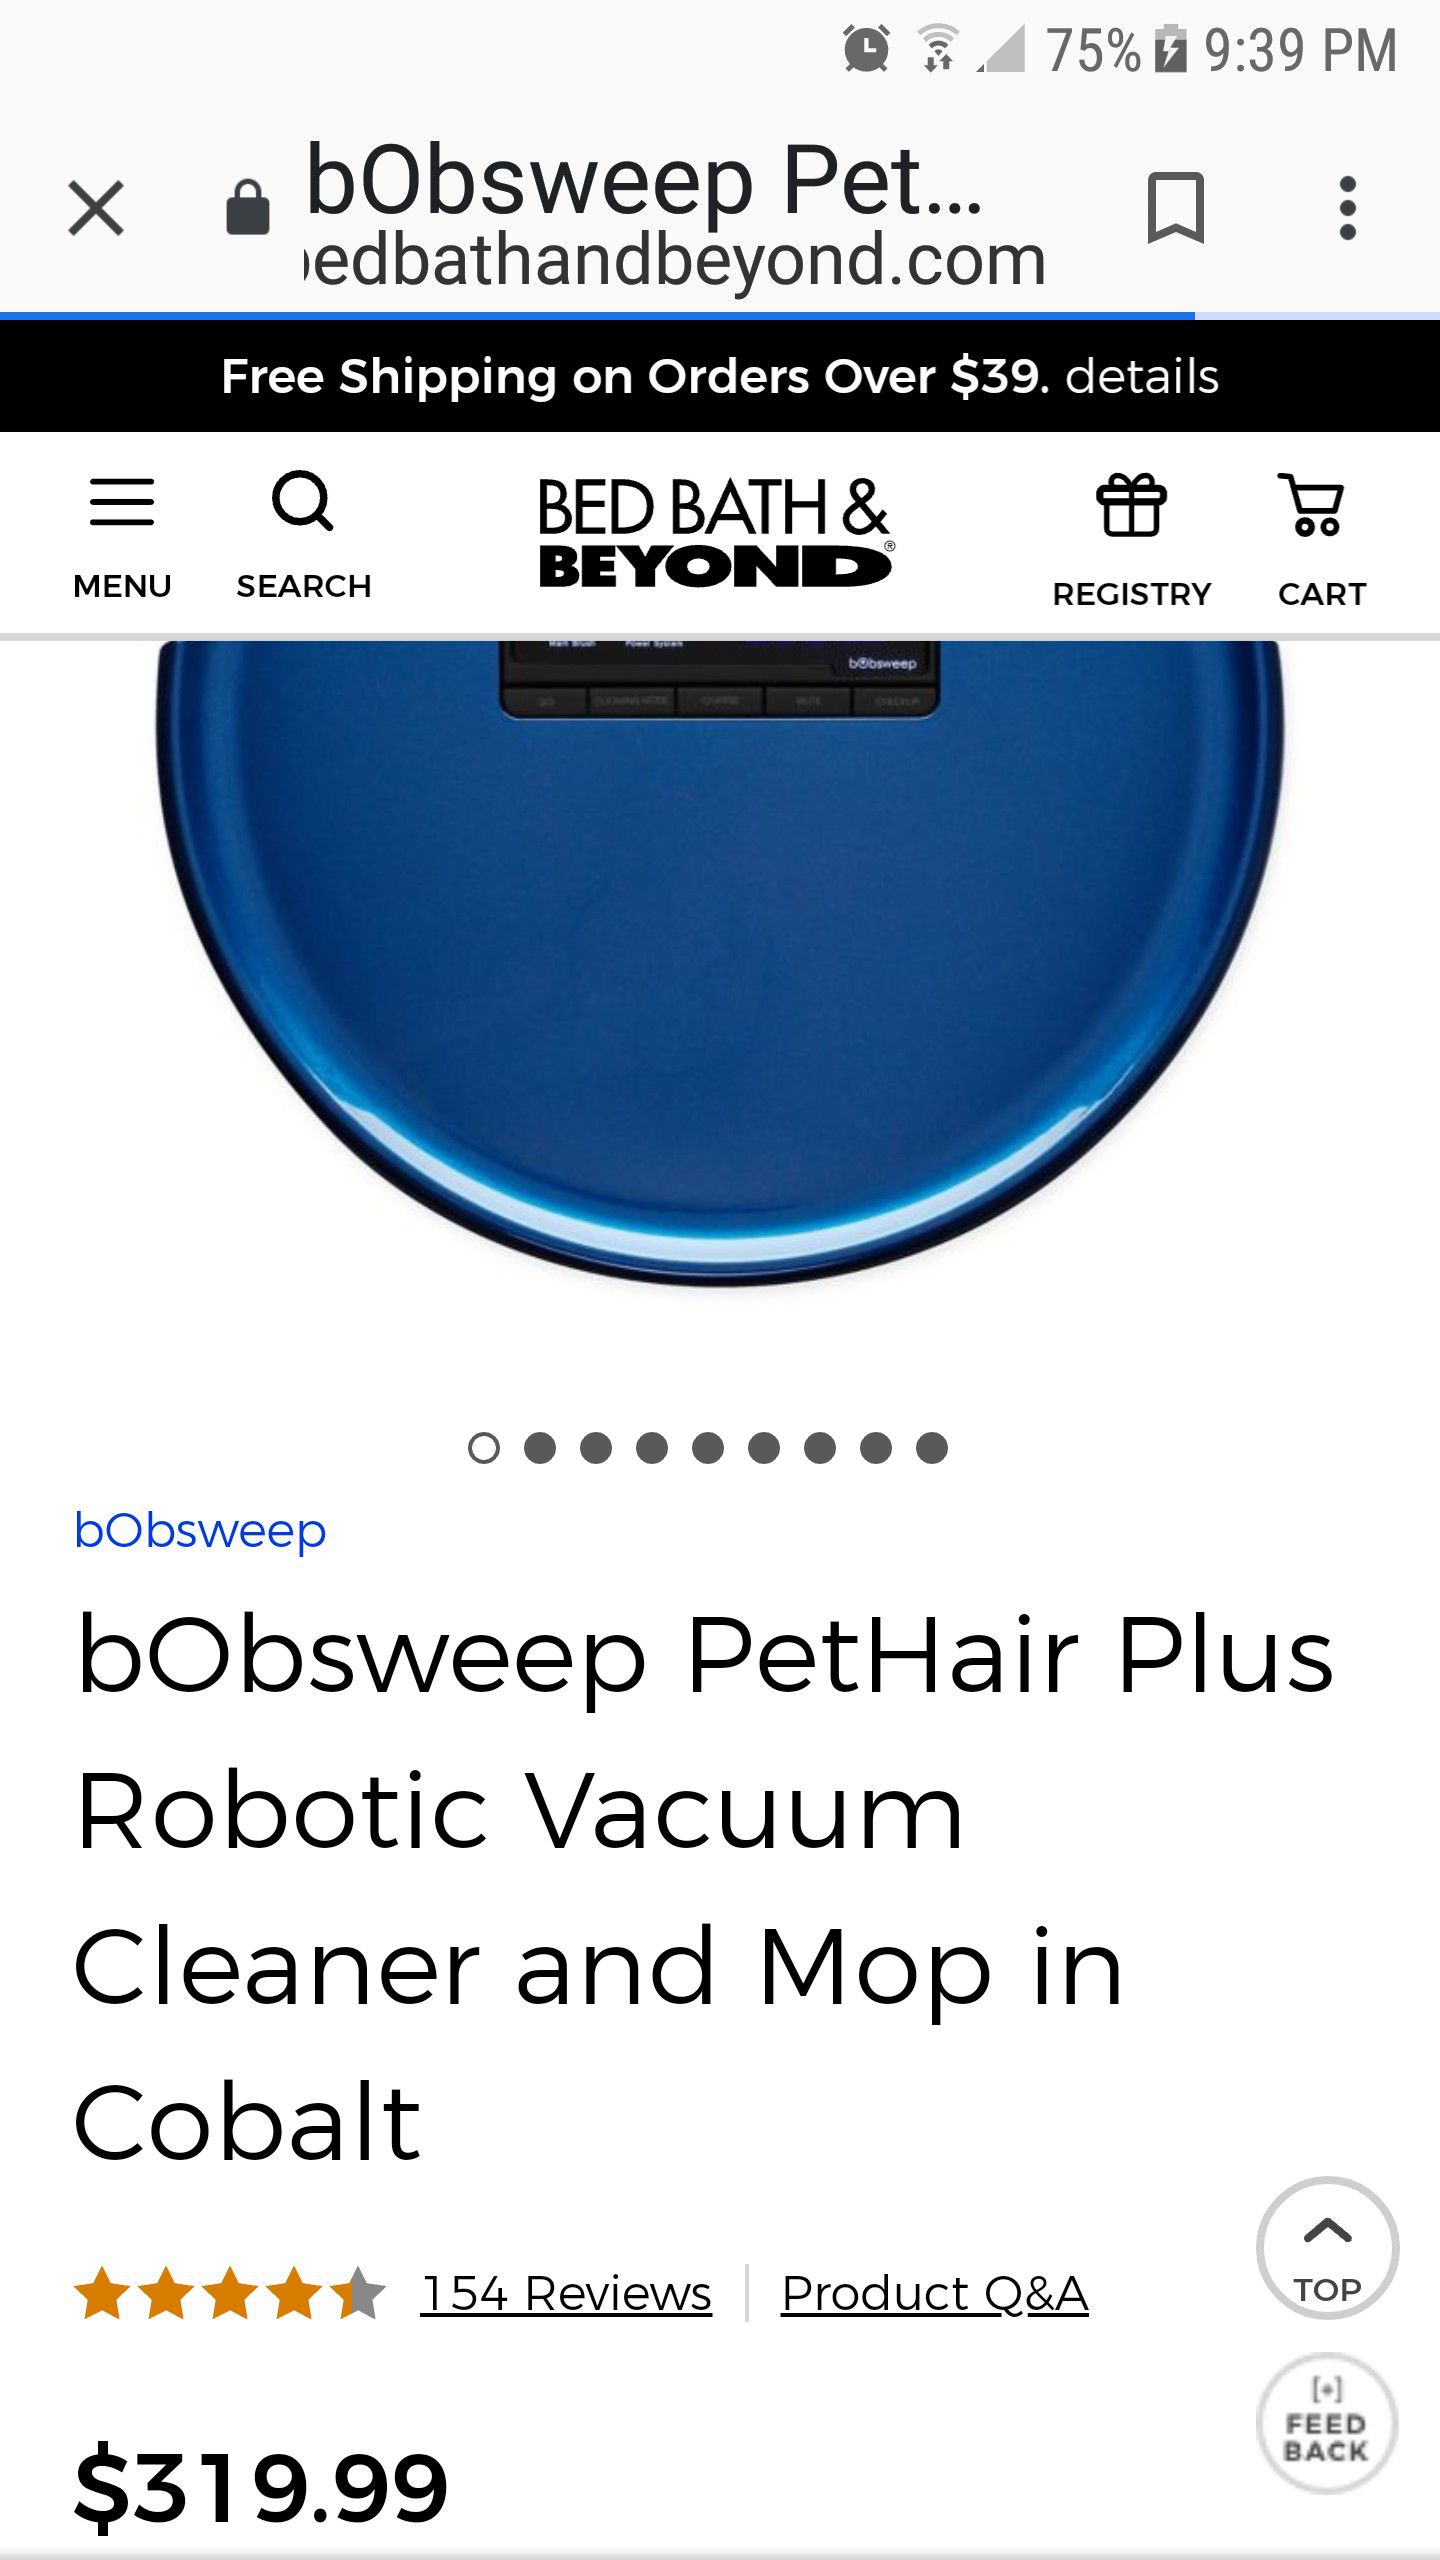 Bobsweep pet hair plus vacuum and mop